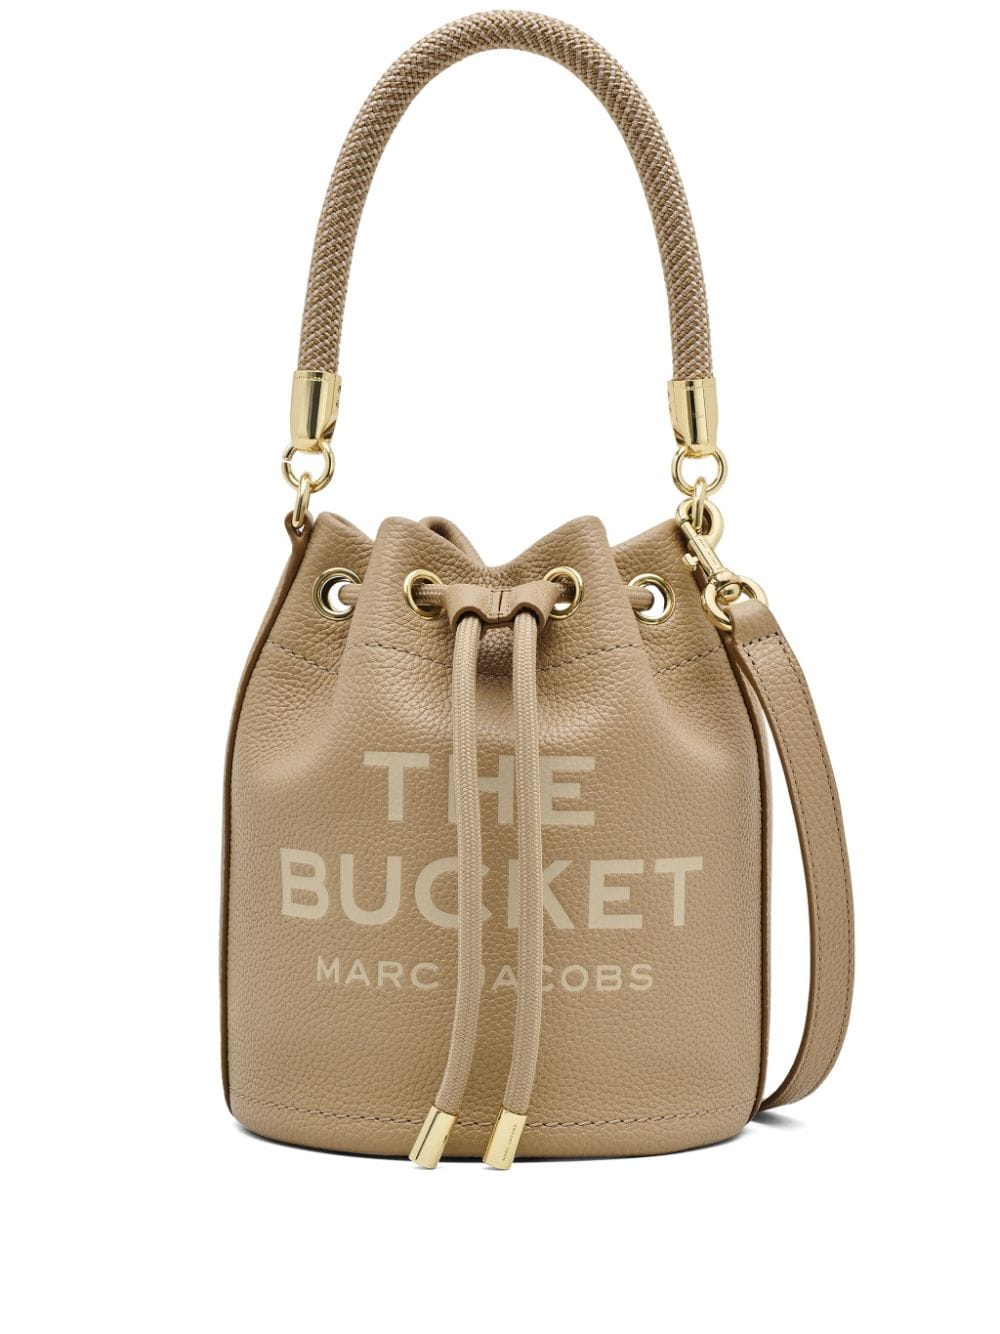 MARC JACOBS Vintage-inspired Camel Bucket Handbag for Women